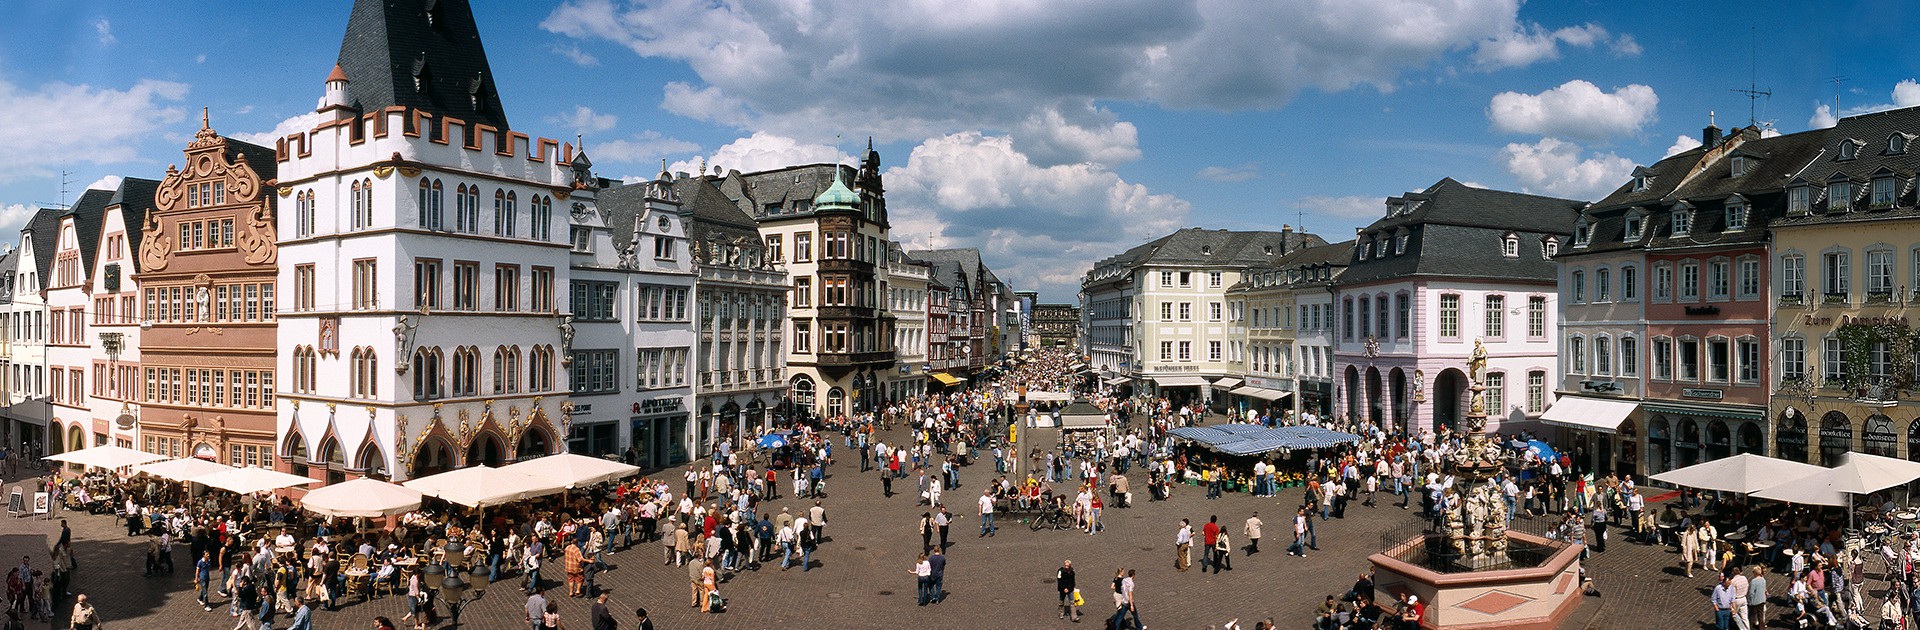 Main Market Square Trier